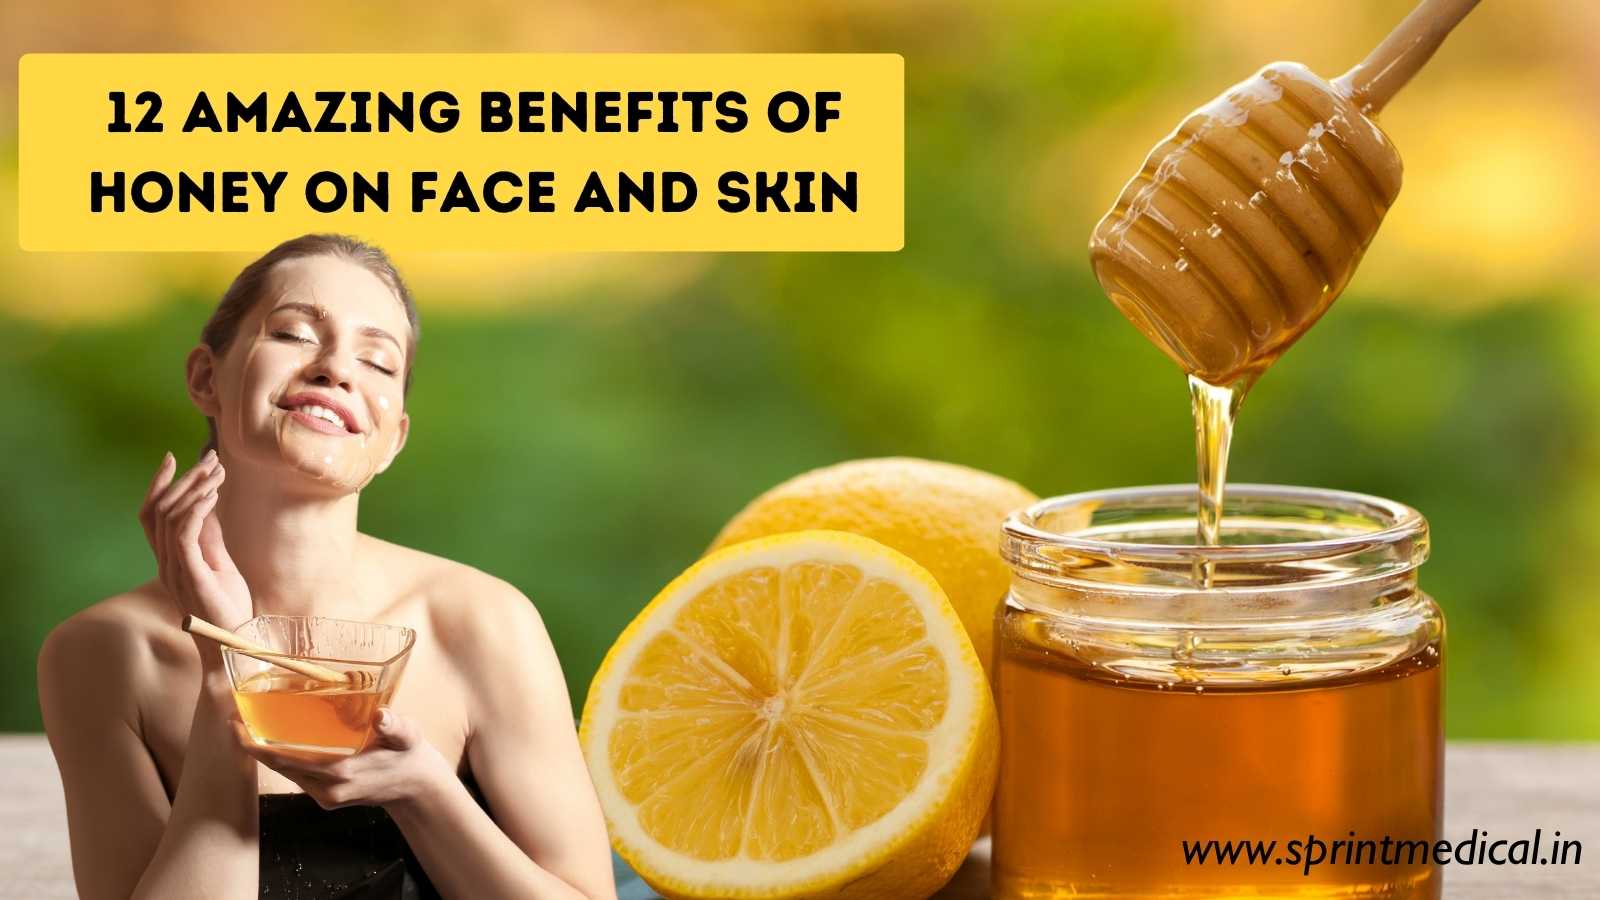 12 Amazing Benefits of Honey on face and Skin